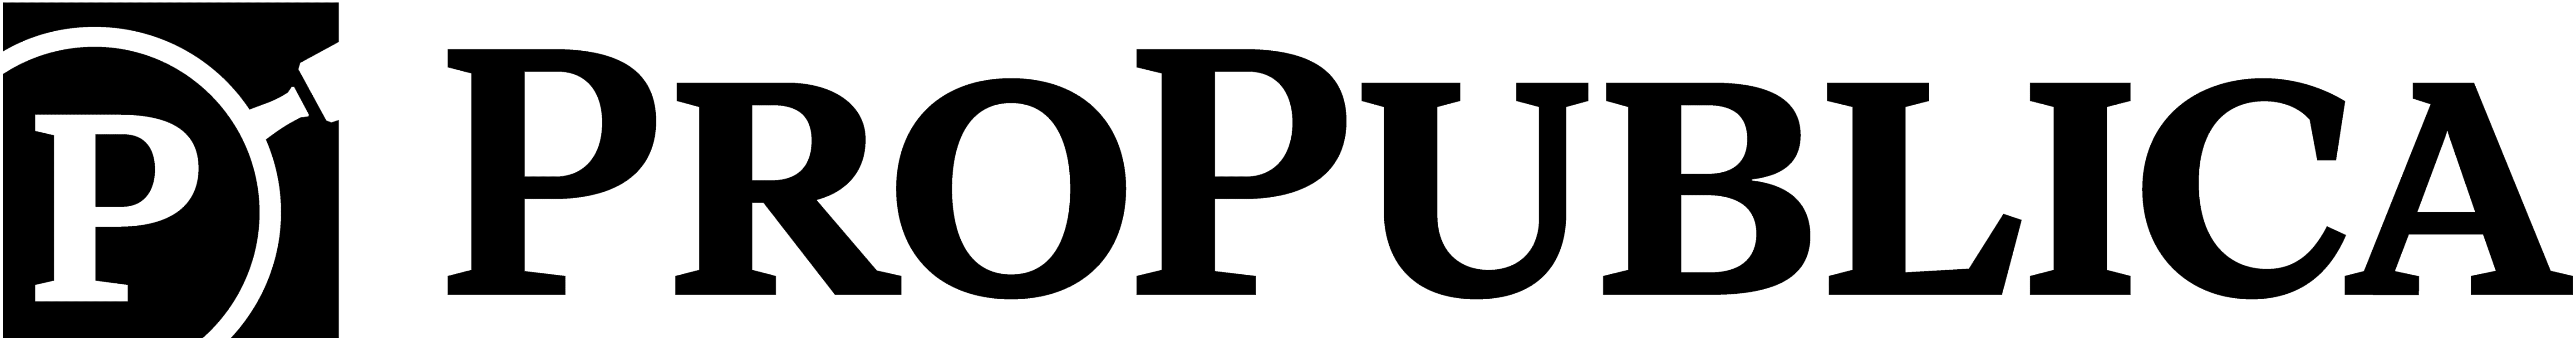 ProPublica black logo